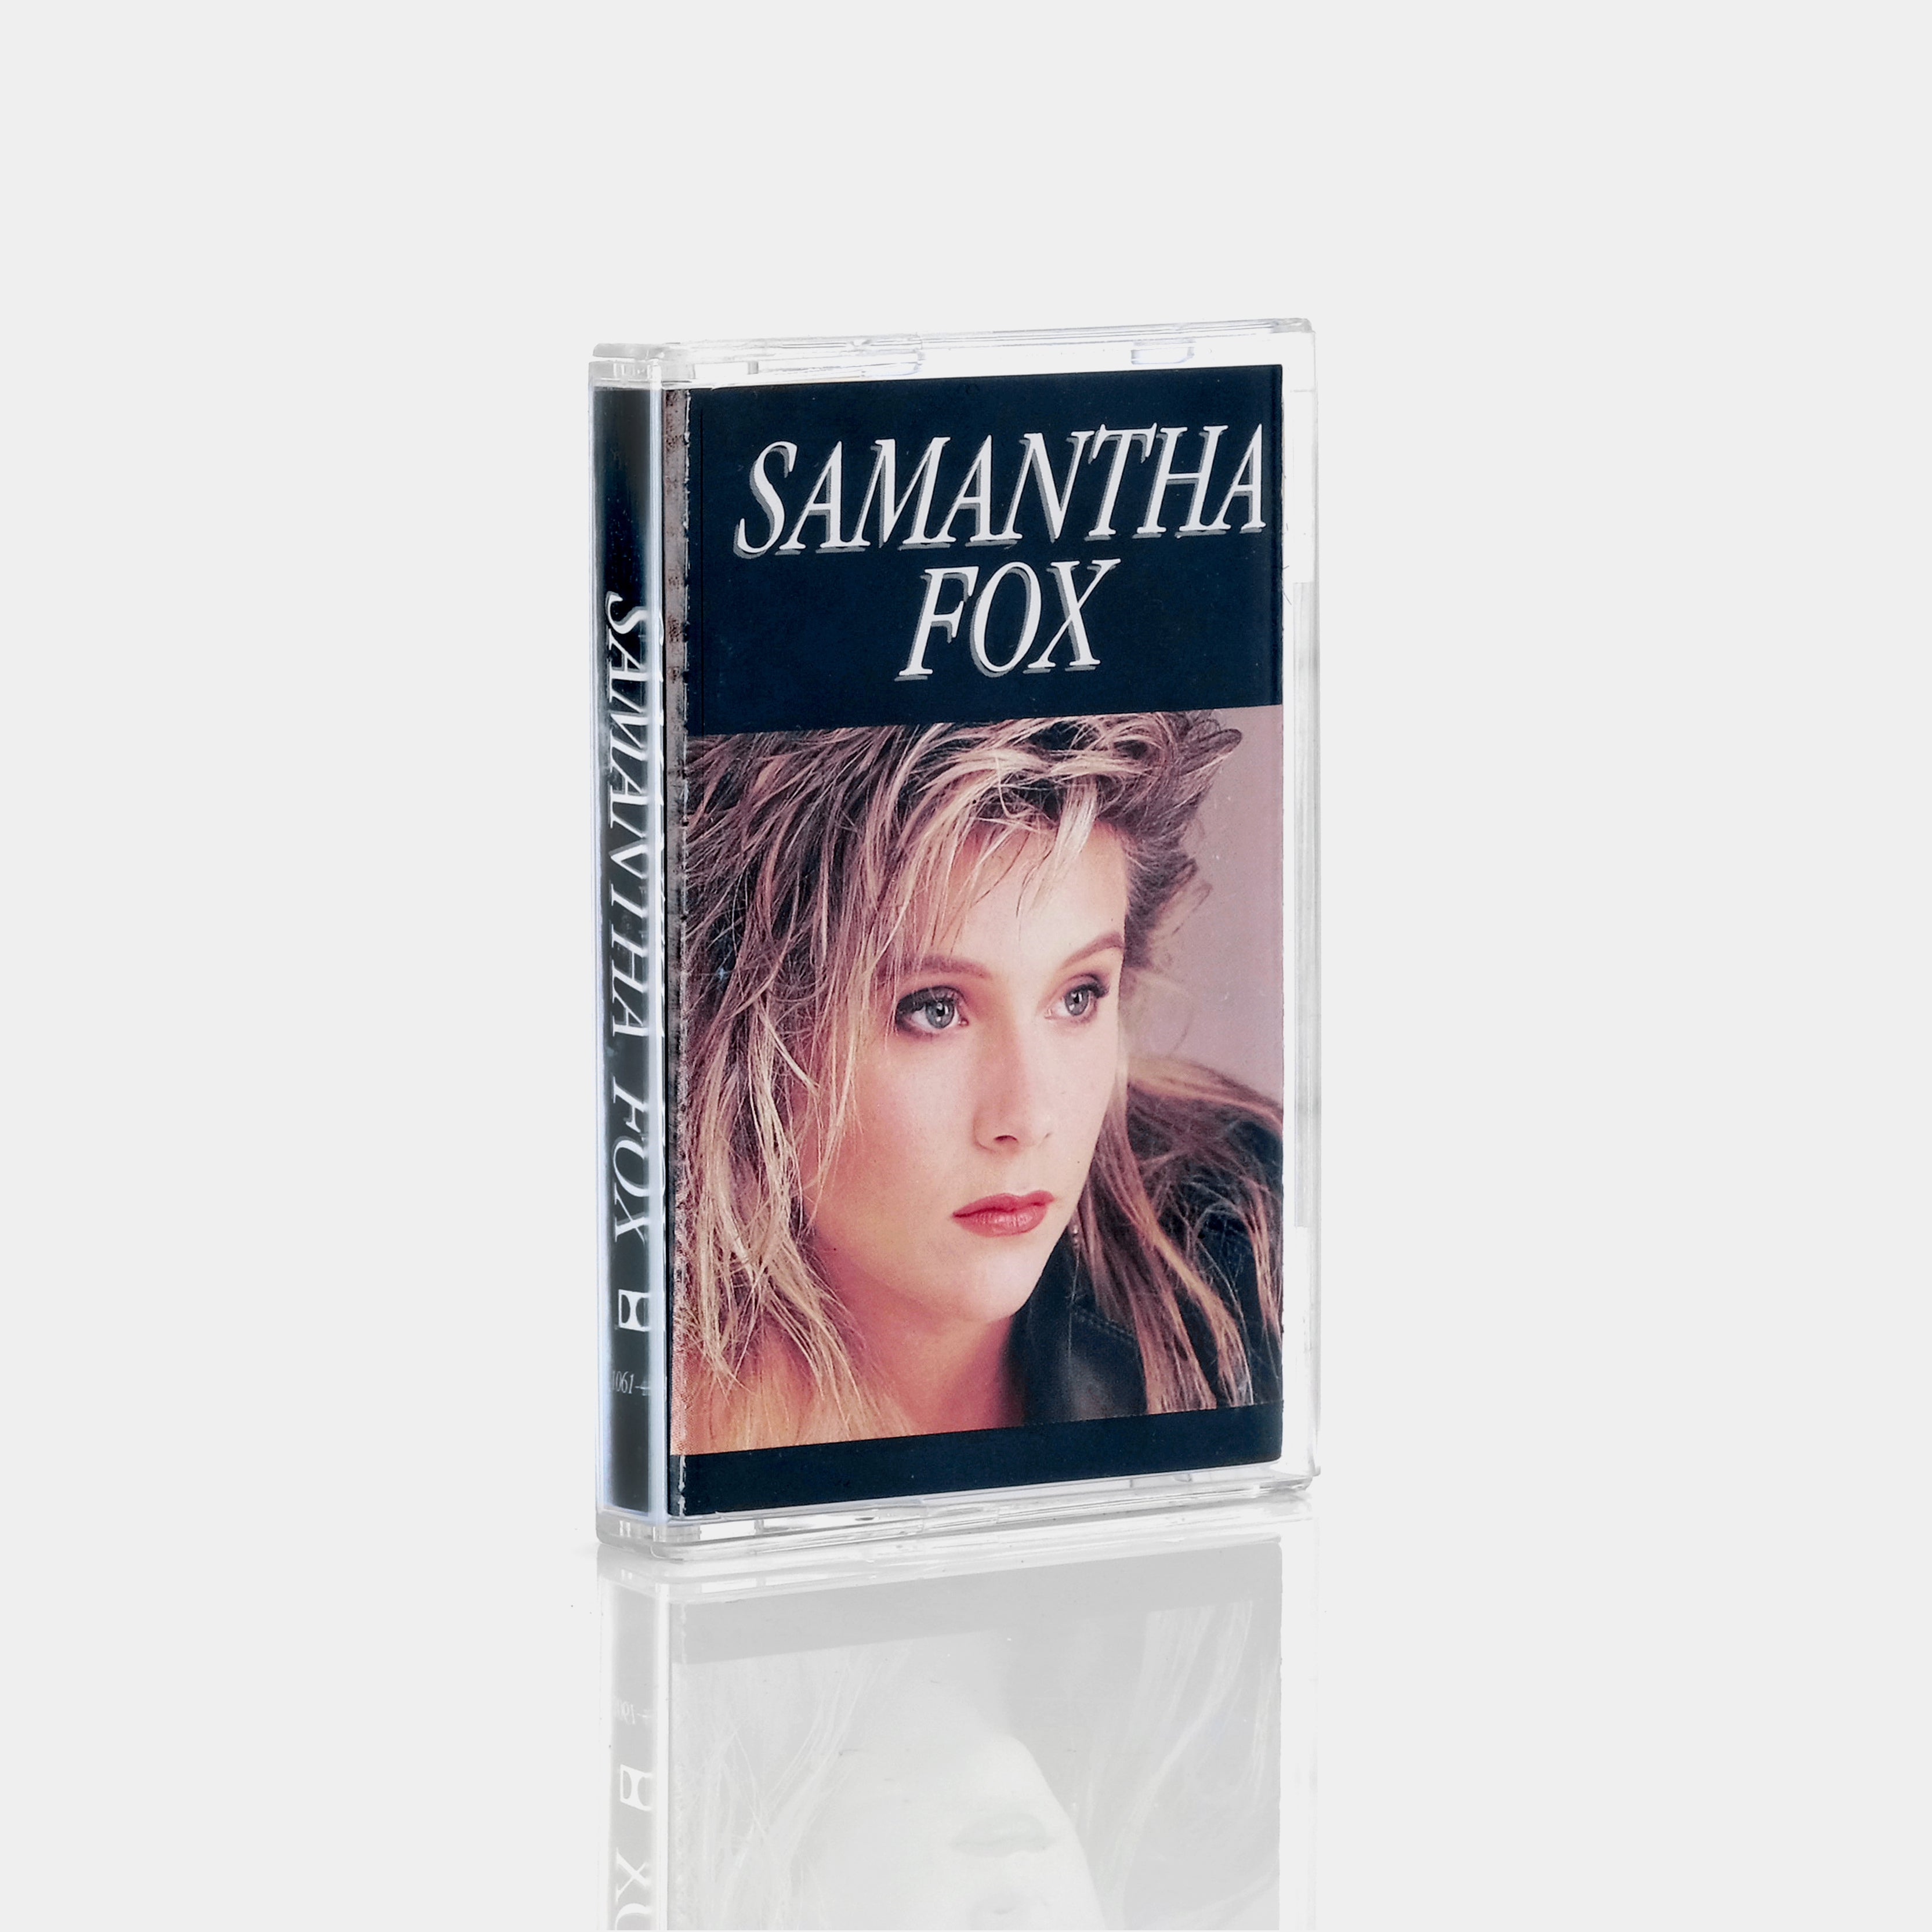 Samantha Fox - Samantha Fox Cassette Tape